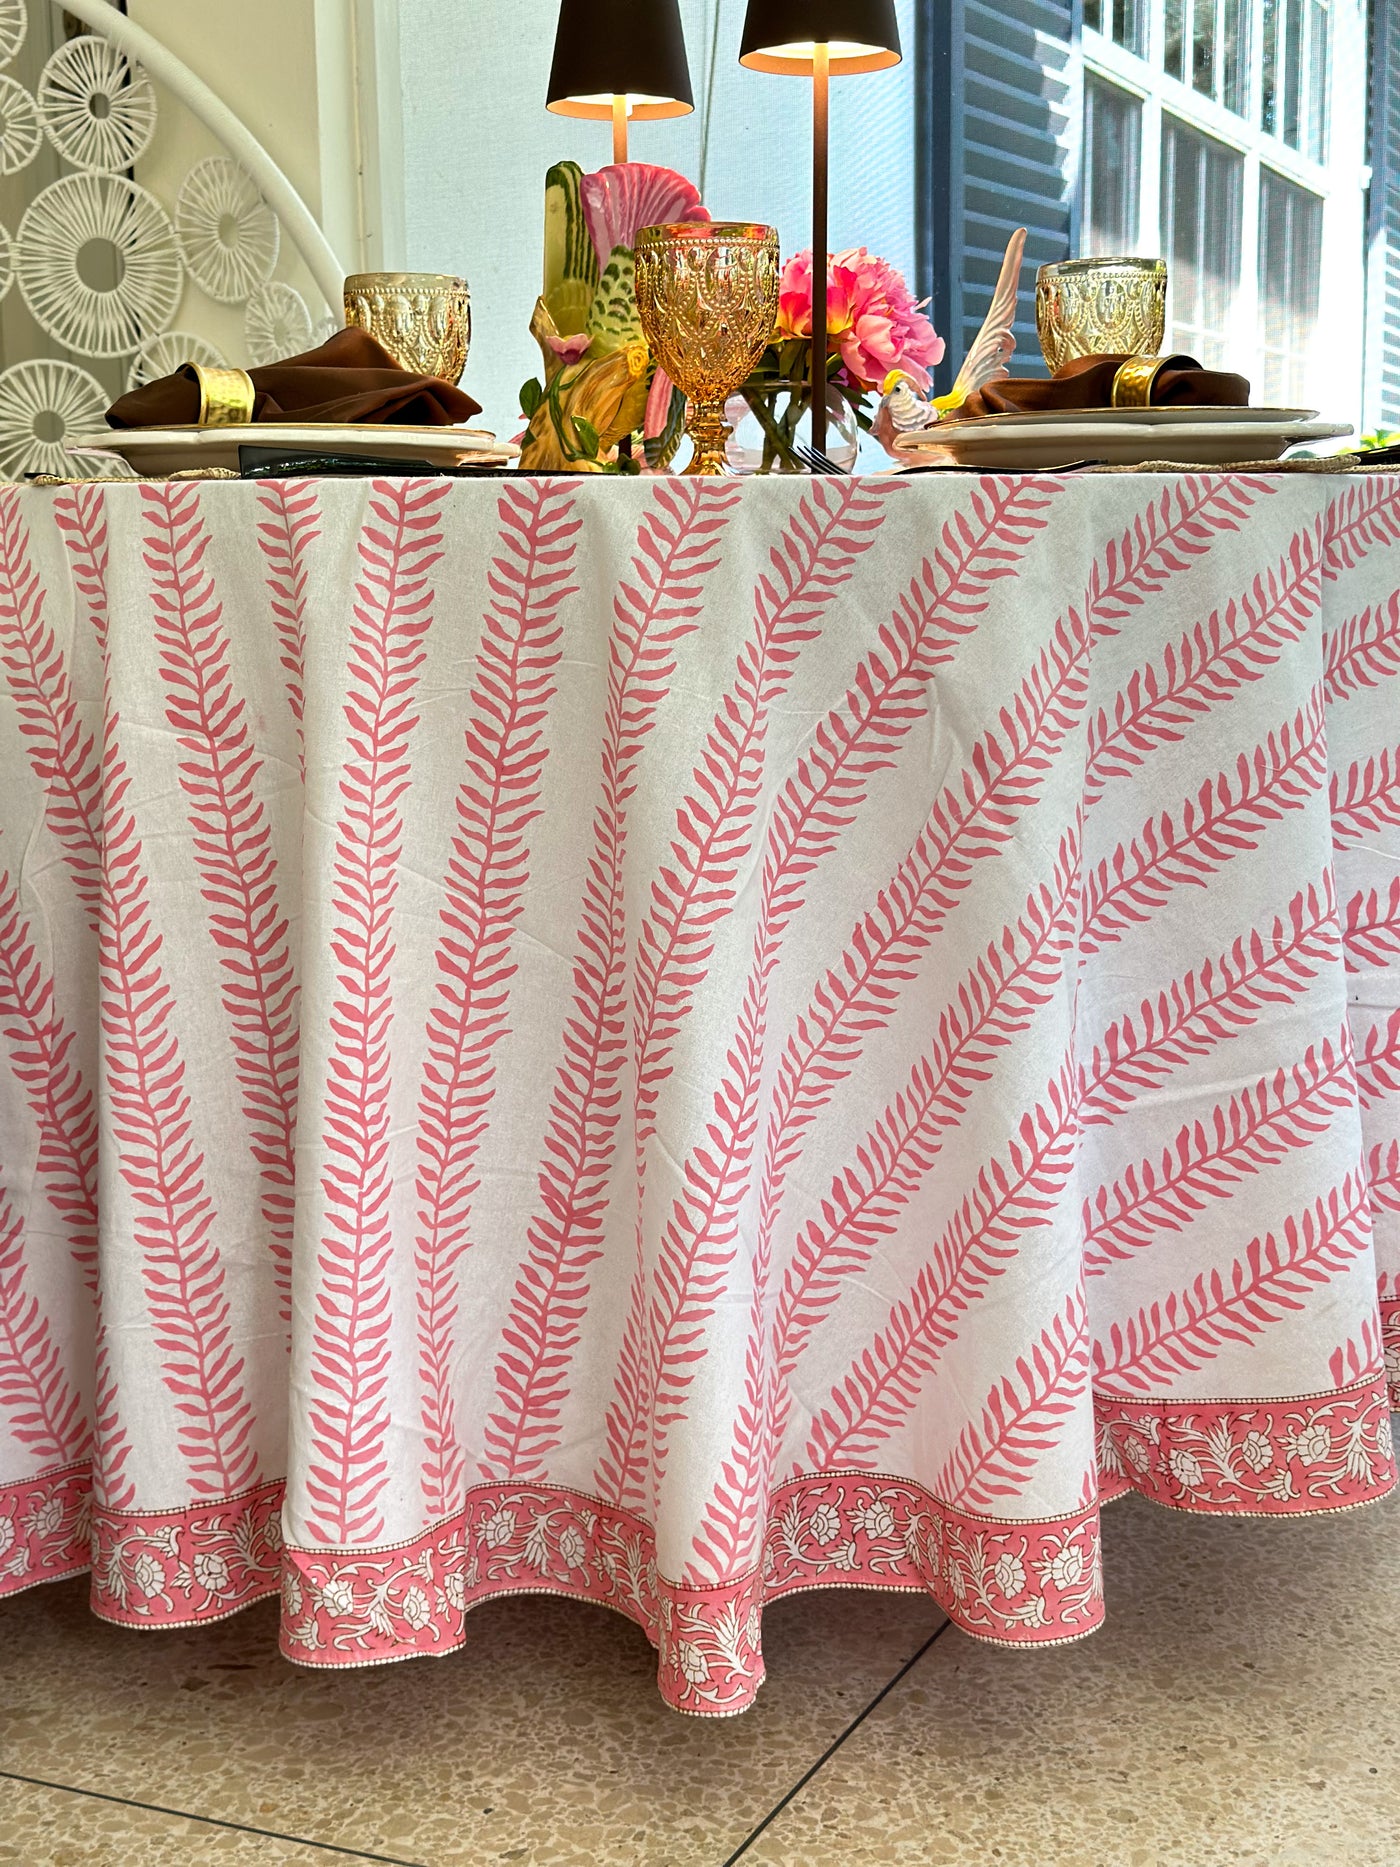 The Pink Trellis Tablecloth